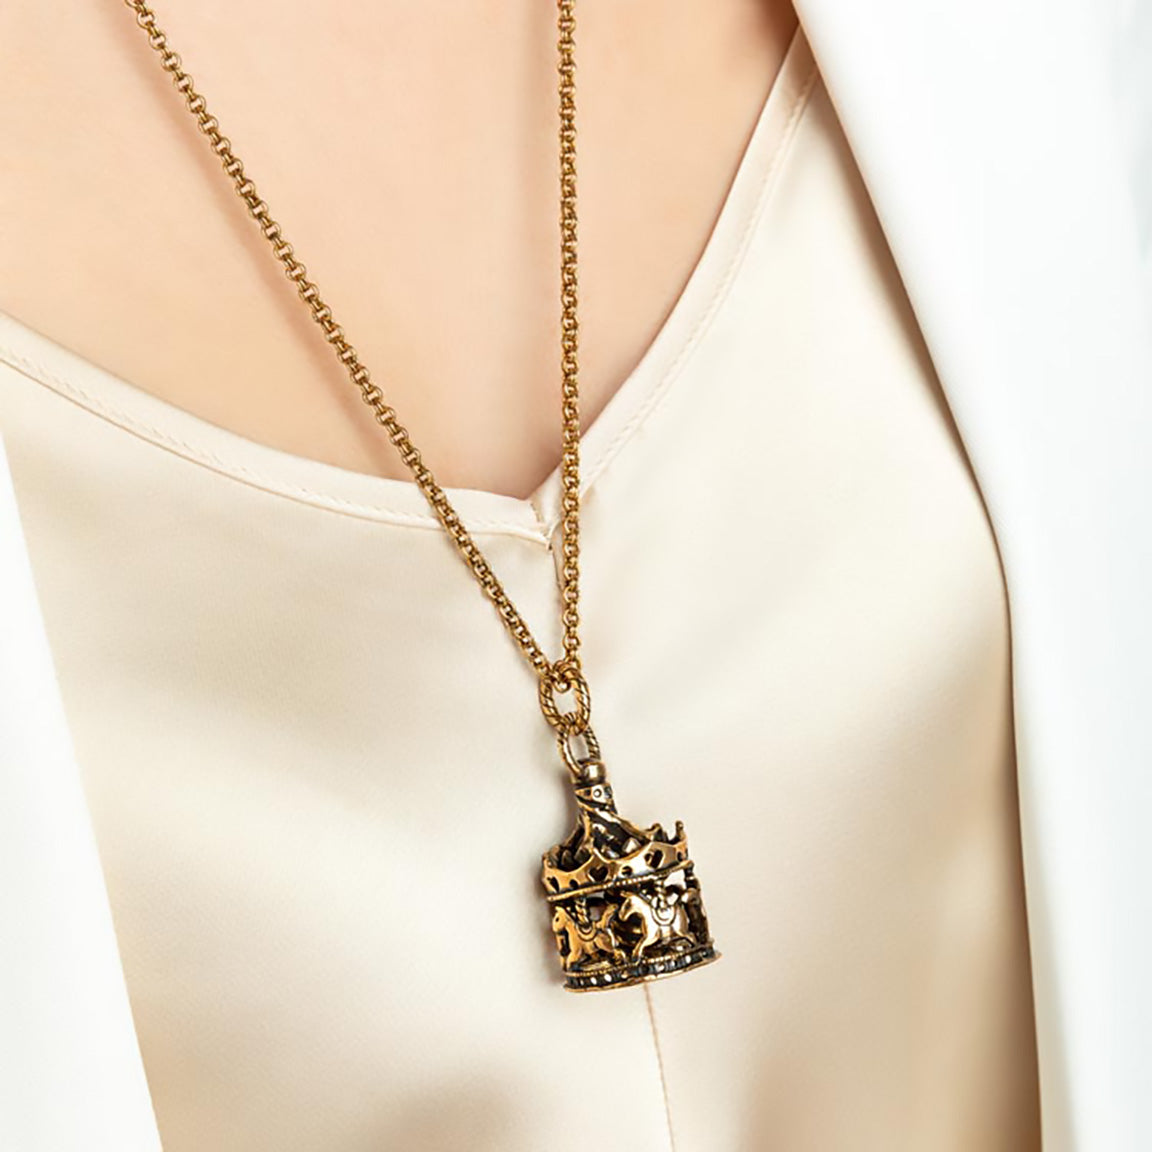 Alcozer Carousel Necklace: Garnets, Italian Design - 0